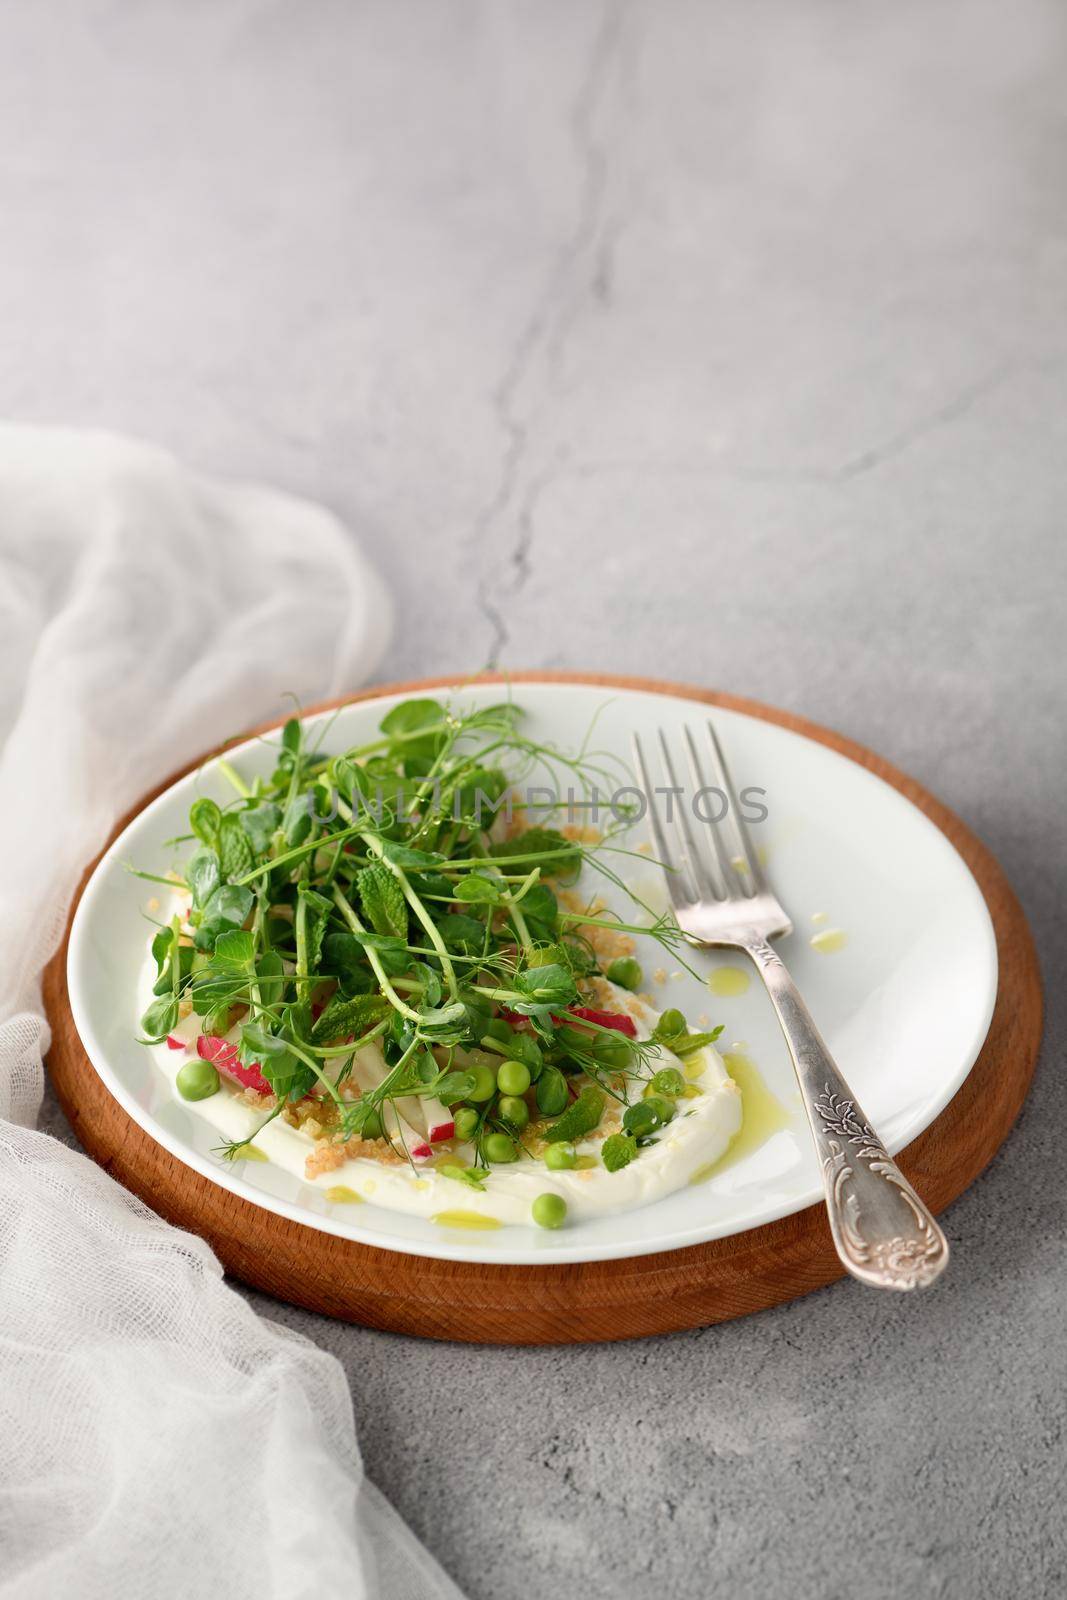 Vegan healthy salad made microgreen sprouts peas, quinoa, radish, mint and yogurt 